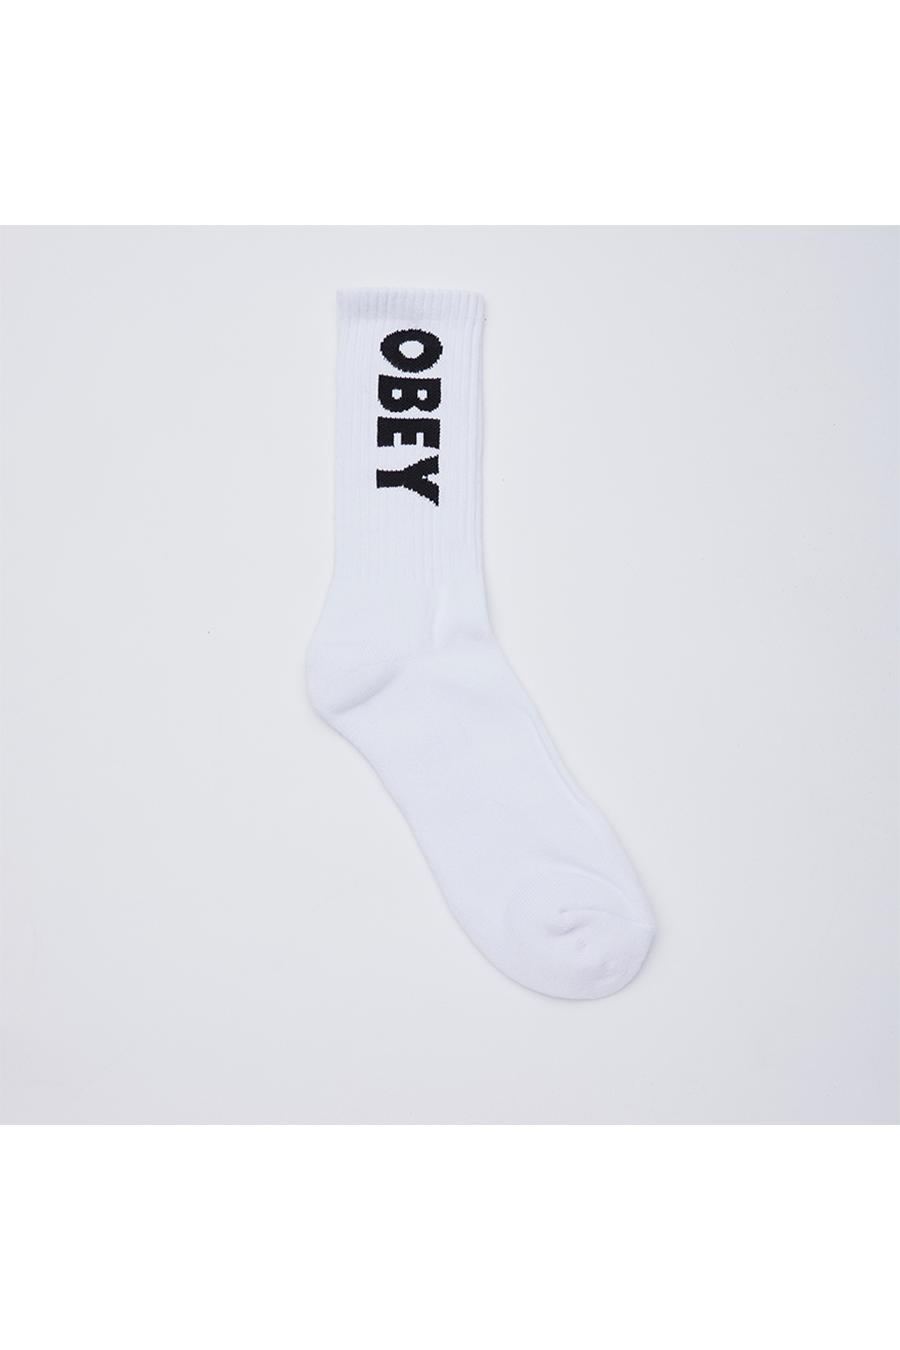 Flash Socks | White - Main Image Number 1 of 1